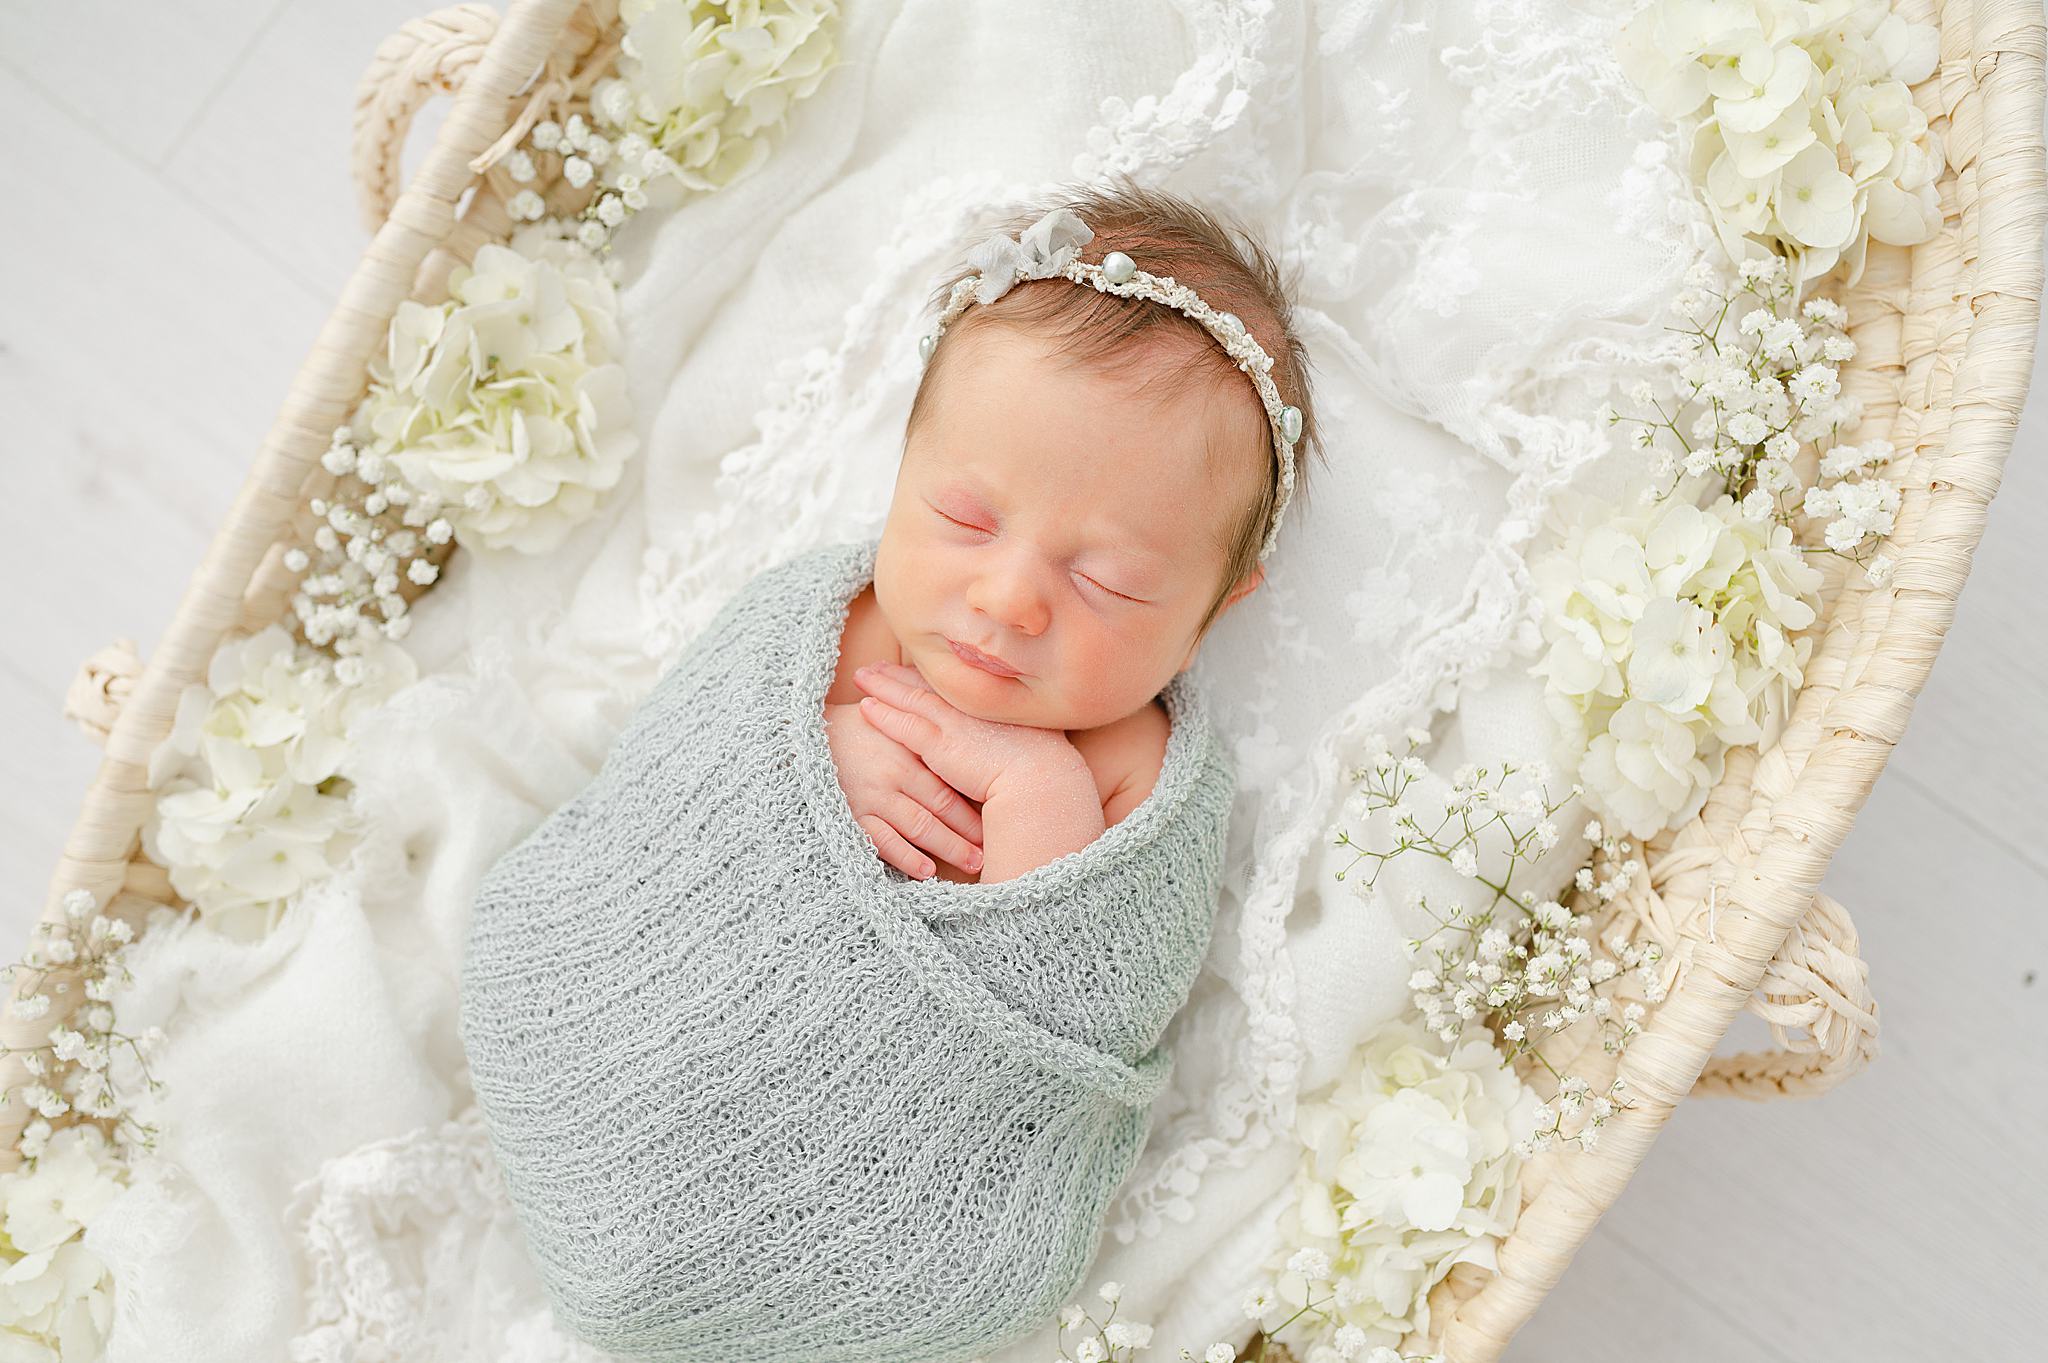 Dayton Photographer | Specializing with Newborns